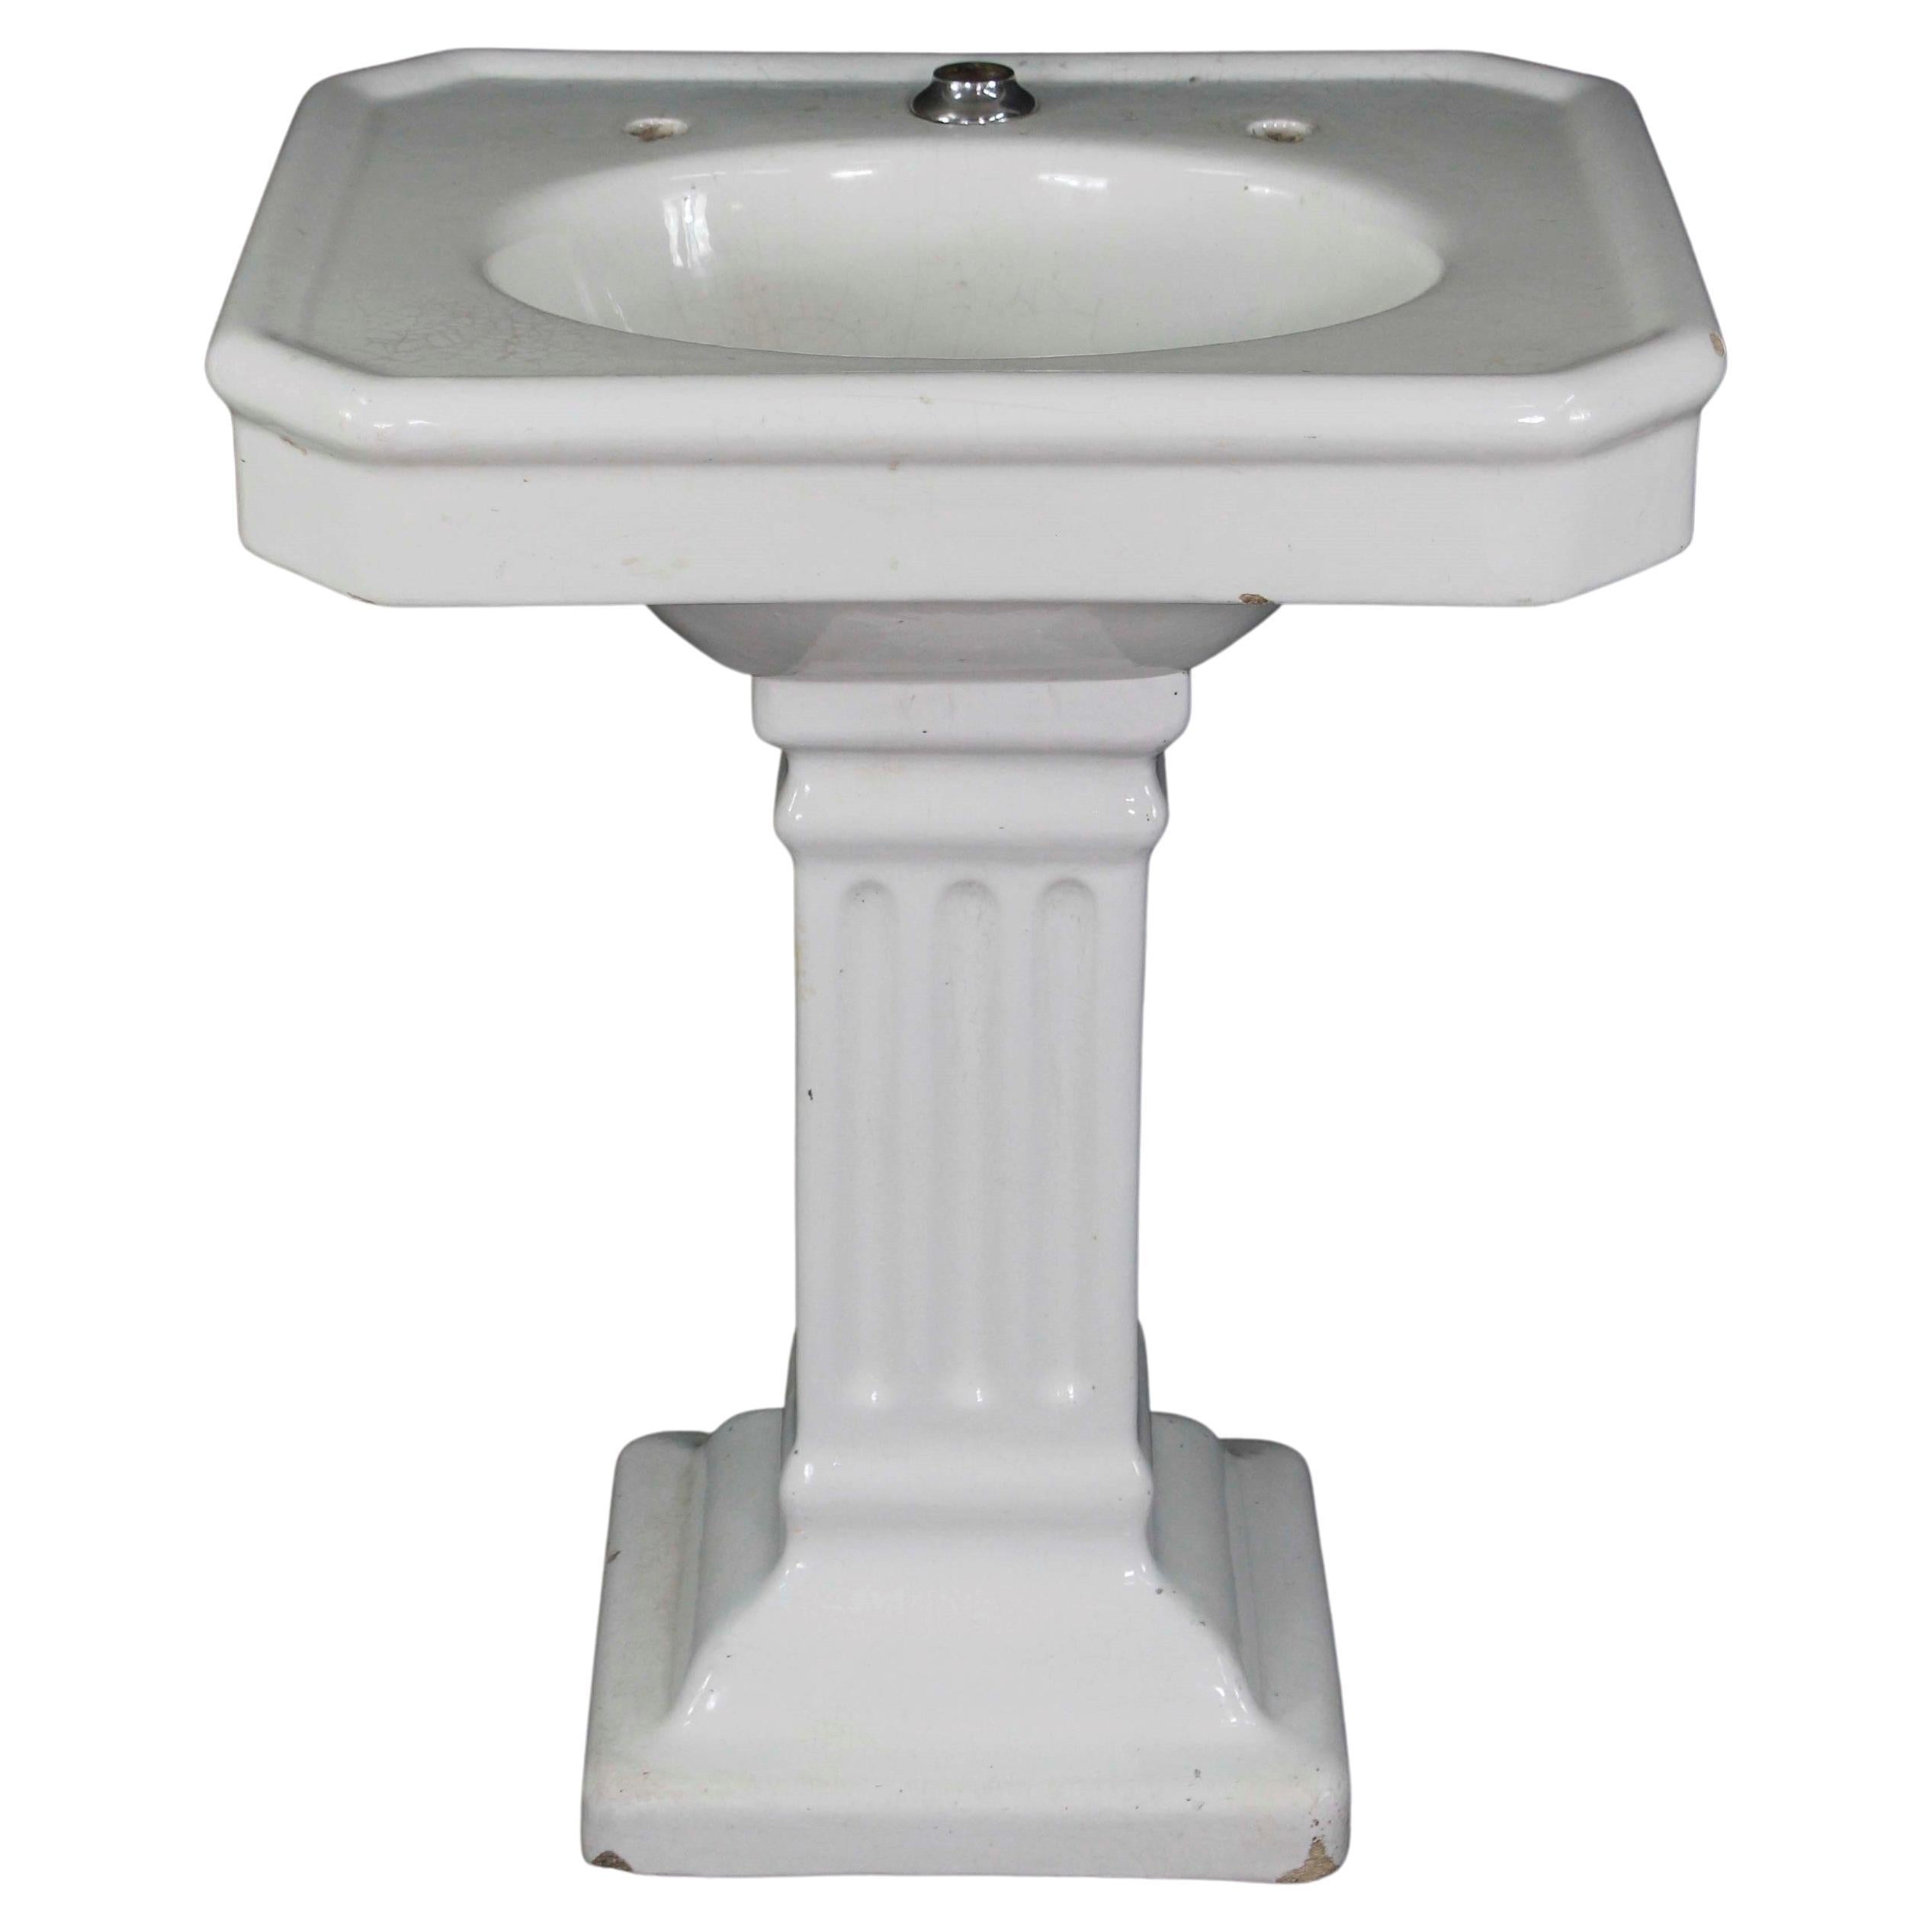 Antique Pedestal Sink in Earthenware with White Porcelain Glaze, Fluted Base